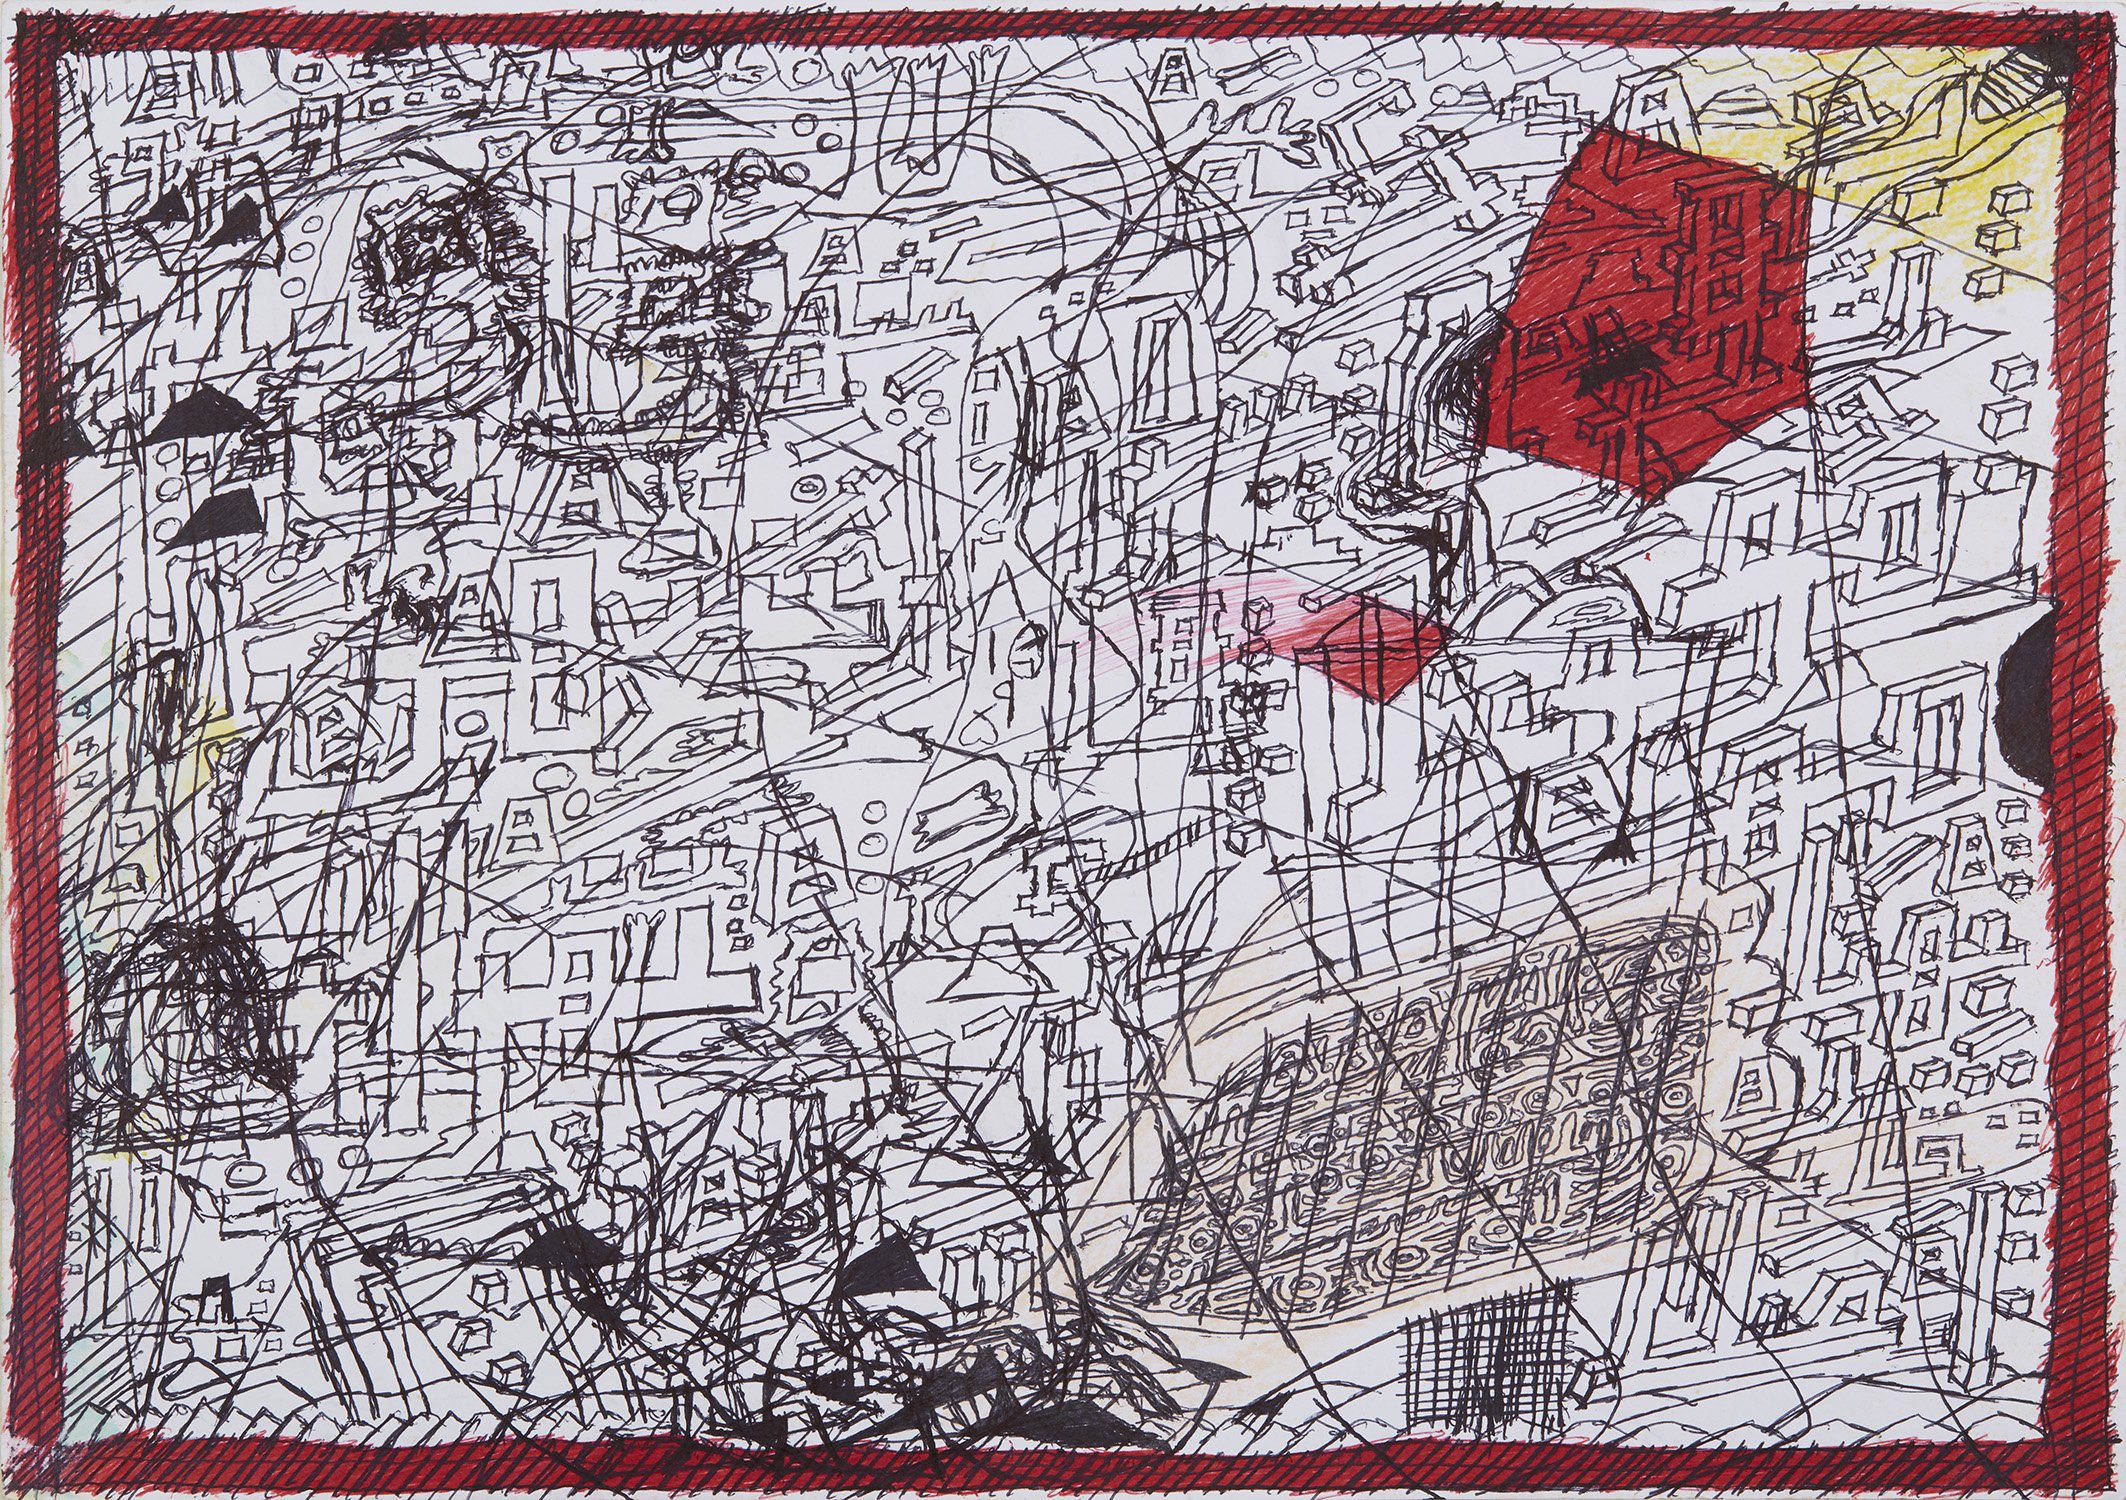   Kiyavash Danesh  Untitled  , n.d. Ink, marker on paper 8.25 x 11.75 inches 21 x 29.8 cm KD 9 